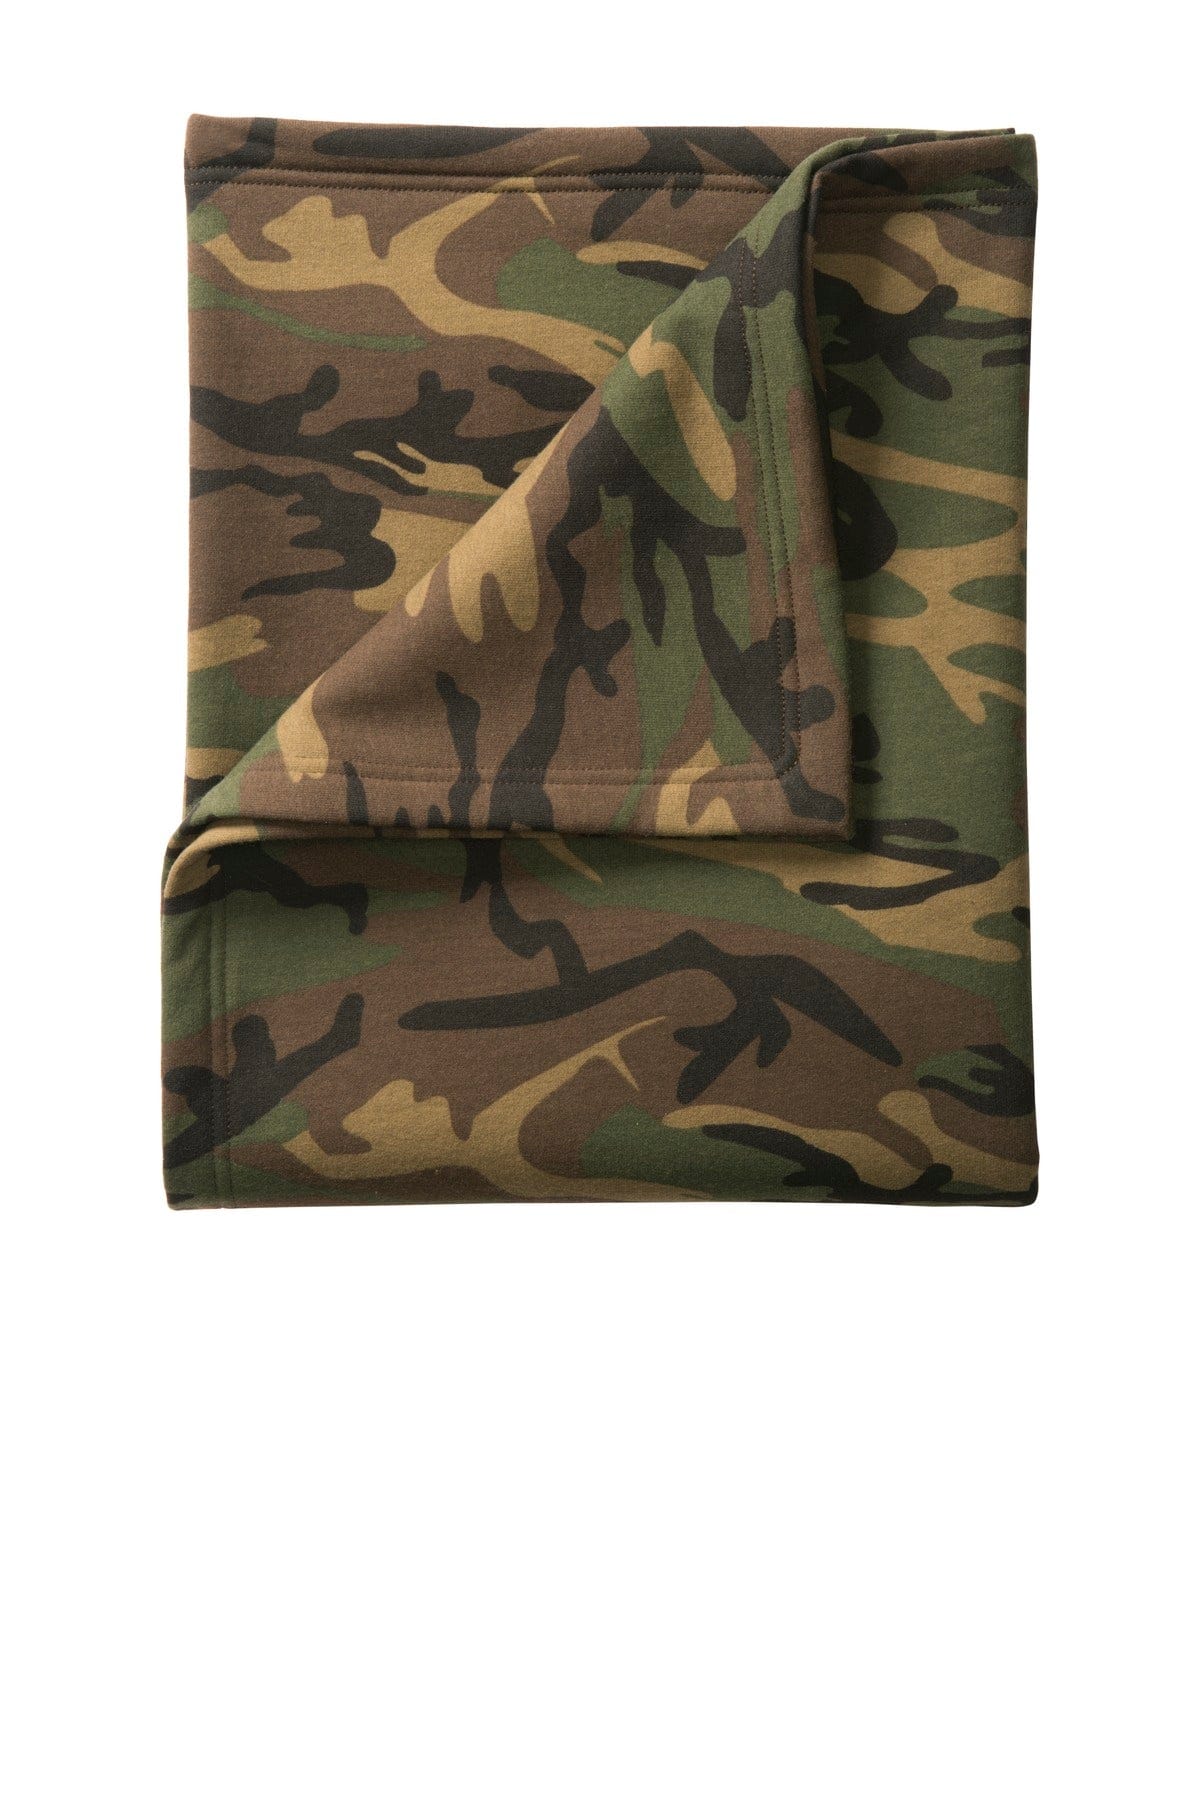 DISCONTINUED Port & Company ® Core Fleece Camo Sweatshirt Blanket. BP78C